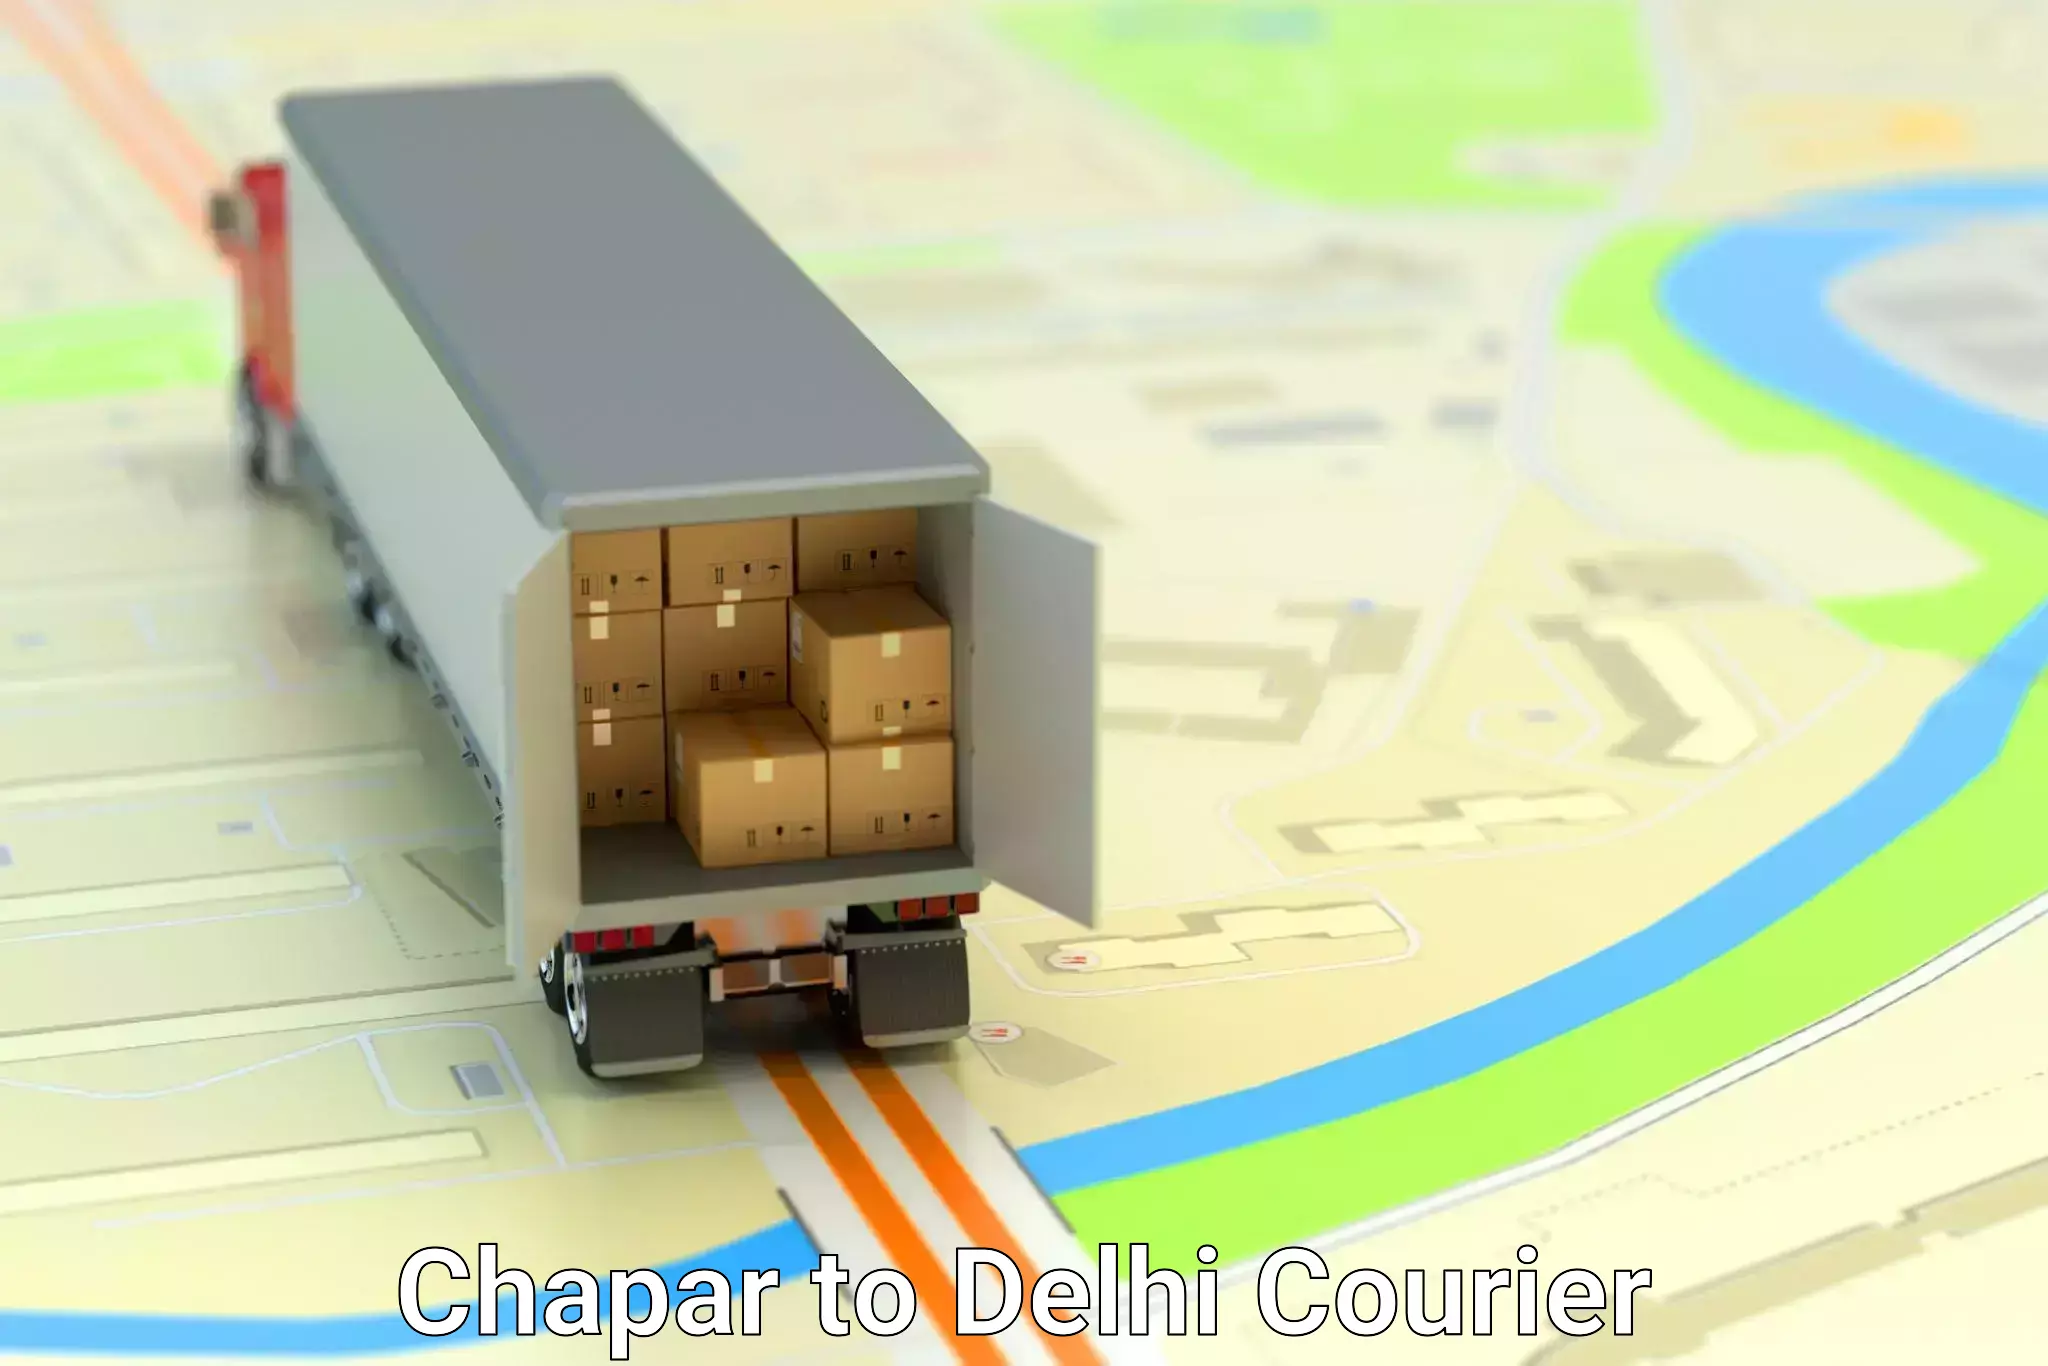 Advanced shipping technology Chapar to Delhi